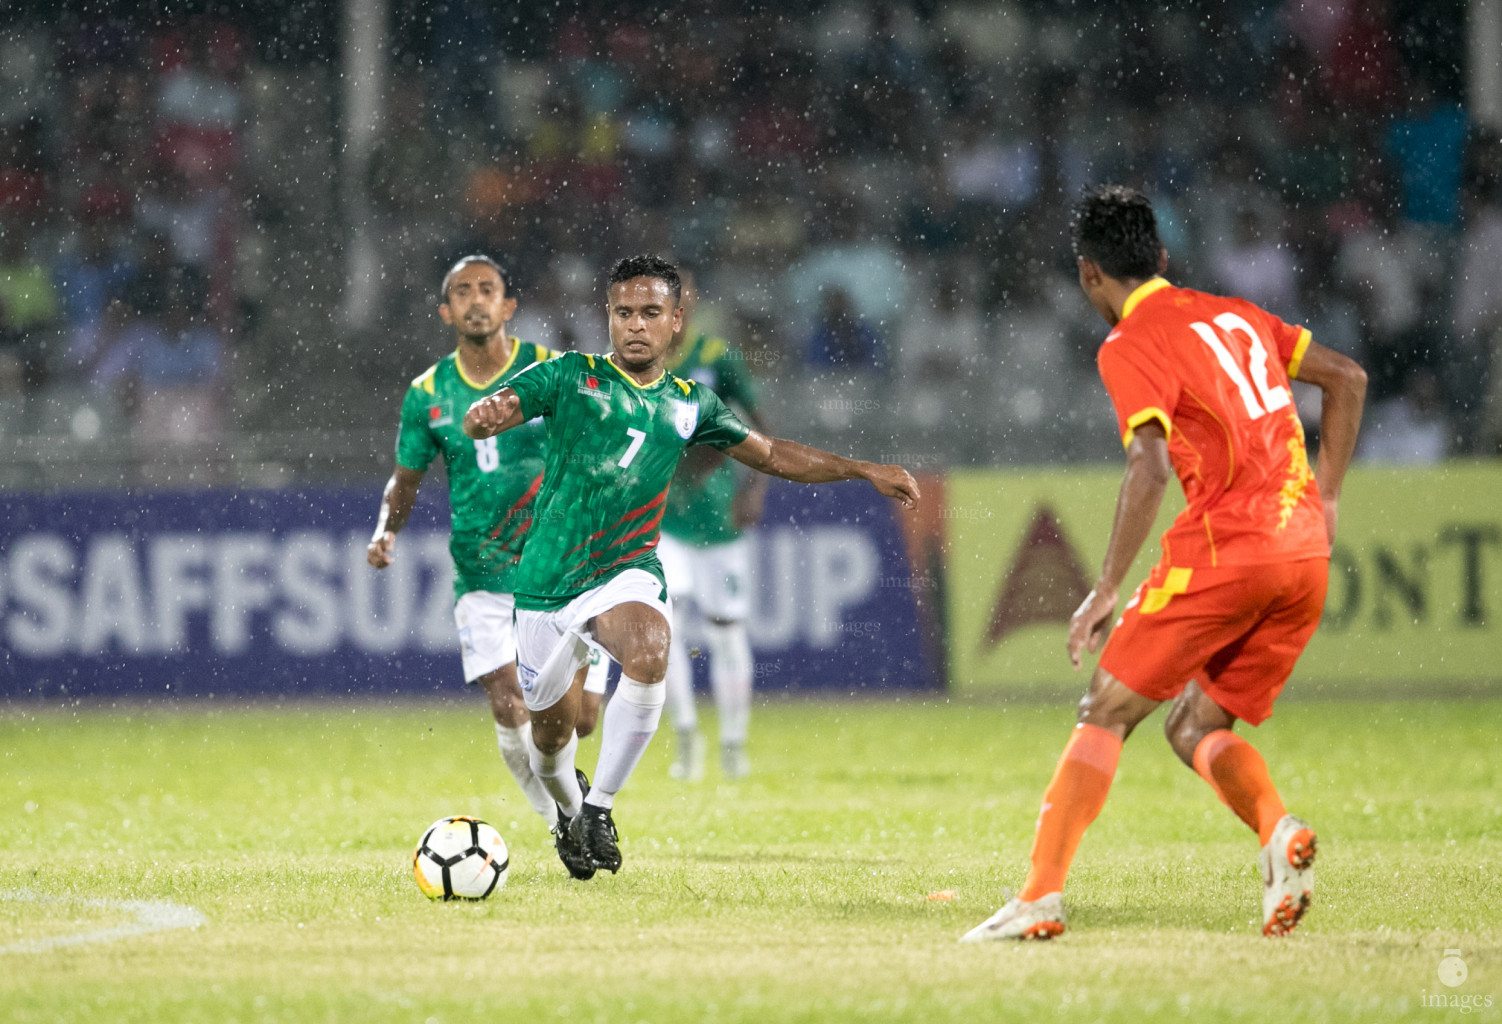 Bhutan vs Bangladesh in SAFF Suzuki Cup 2018 in Dhaka, Bangladesh, Monday, September 04, 2018. (Images.mv Photo/Hussain Sinan).